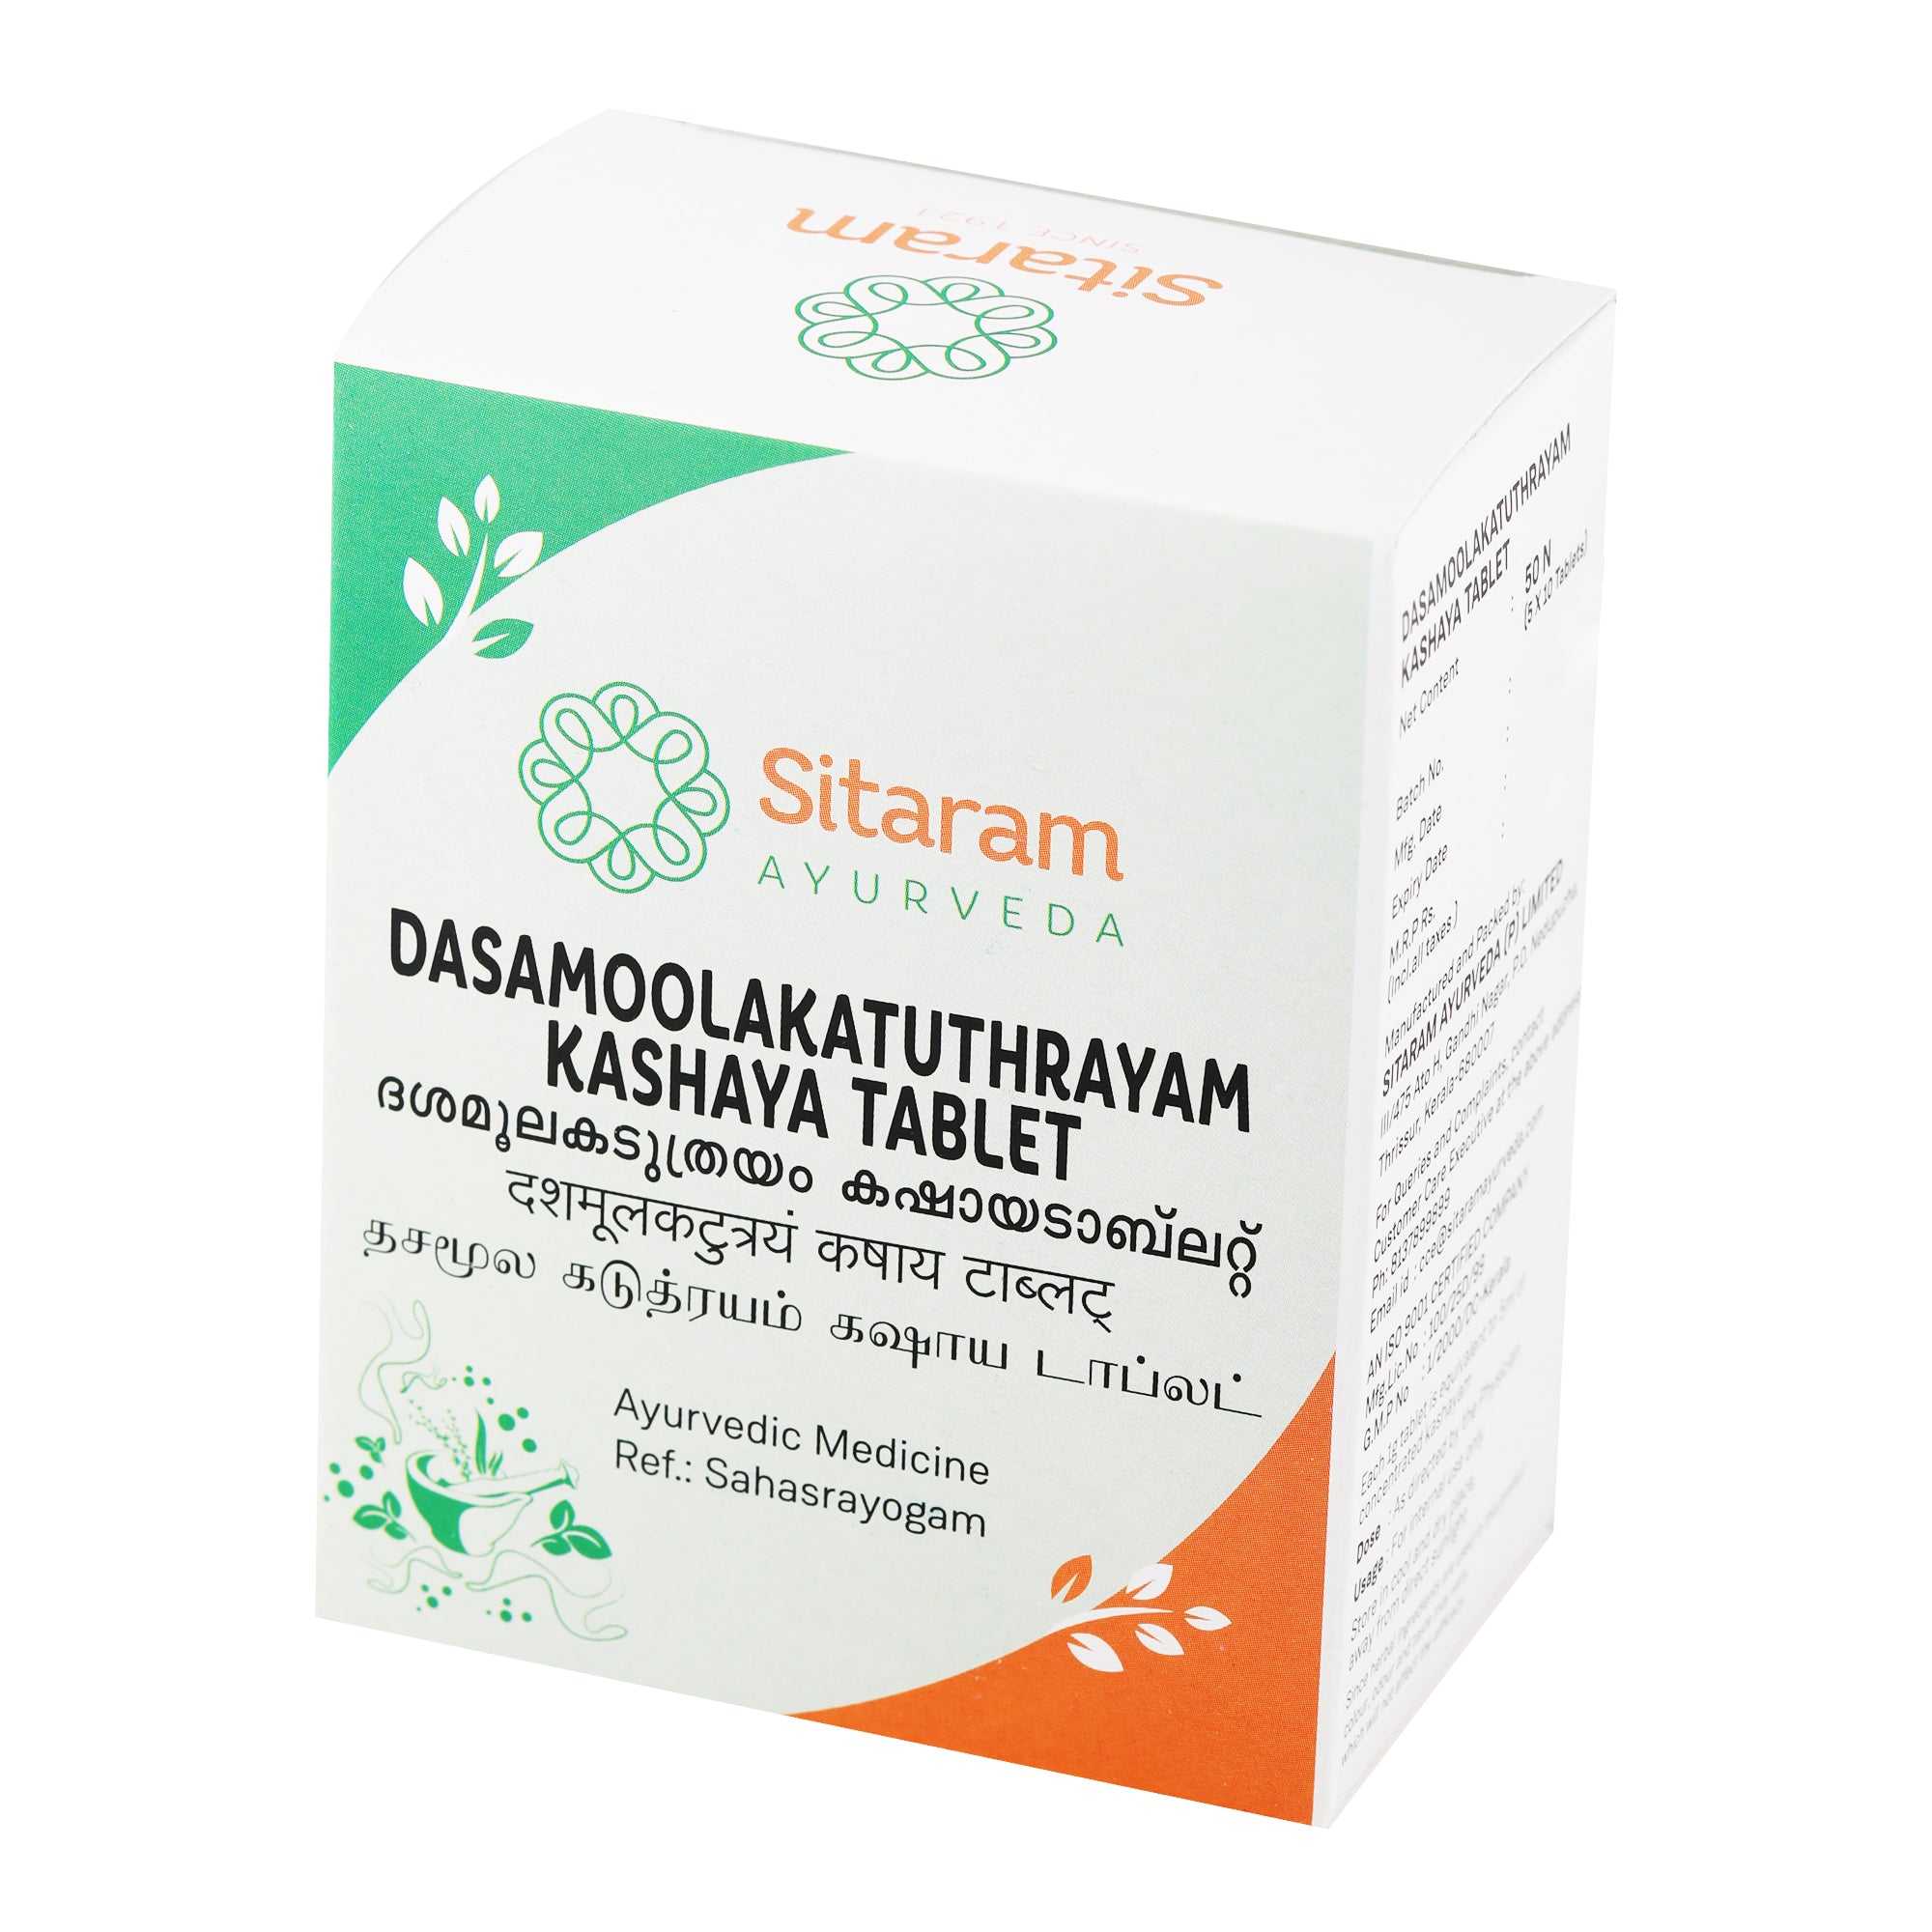 Sitaram Ayurveda Dashamoolakaduthrayam Kashaya Tablet 50Nos (Prescription Medication)